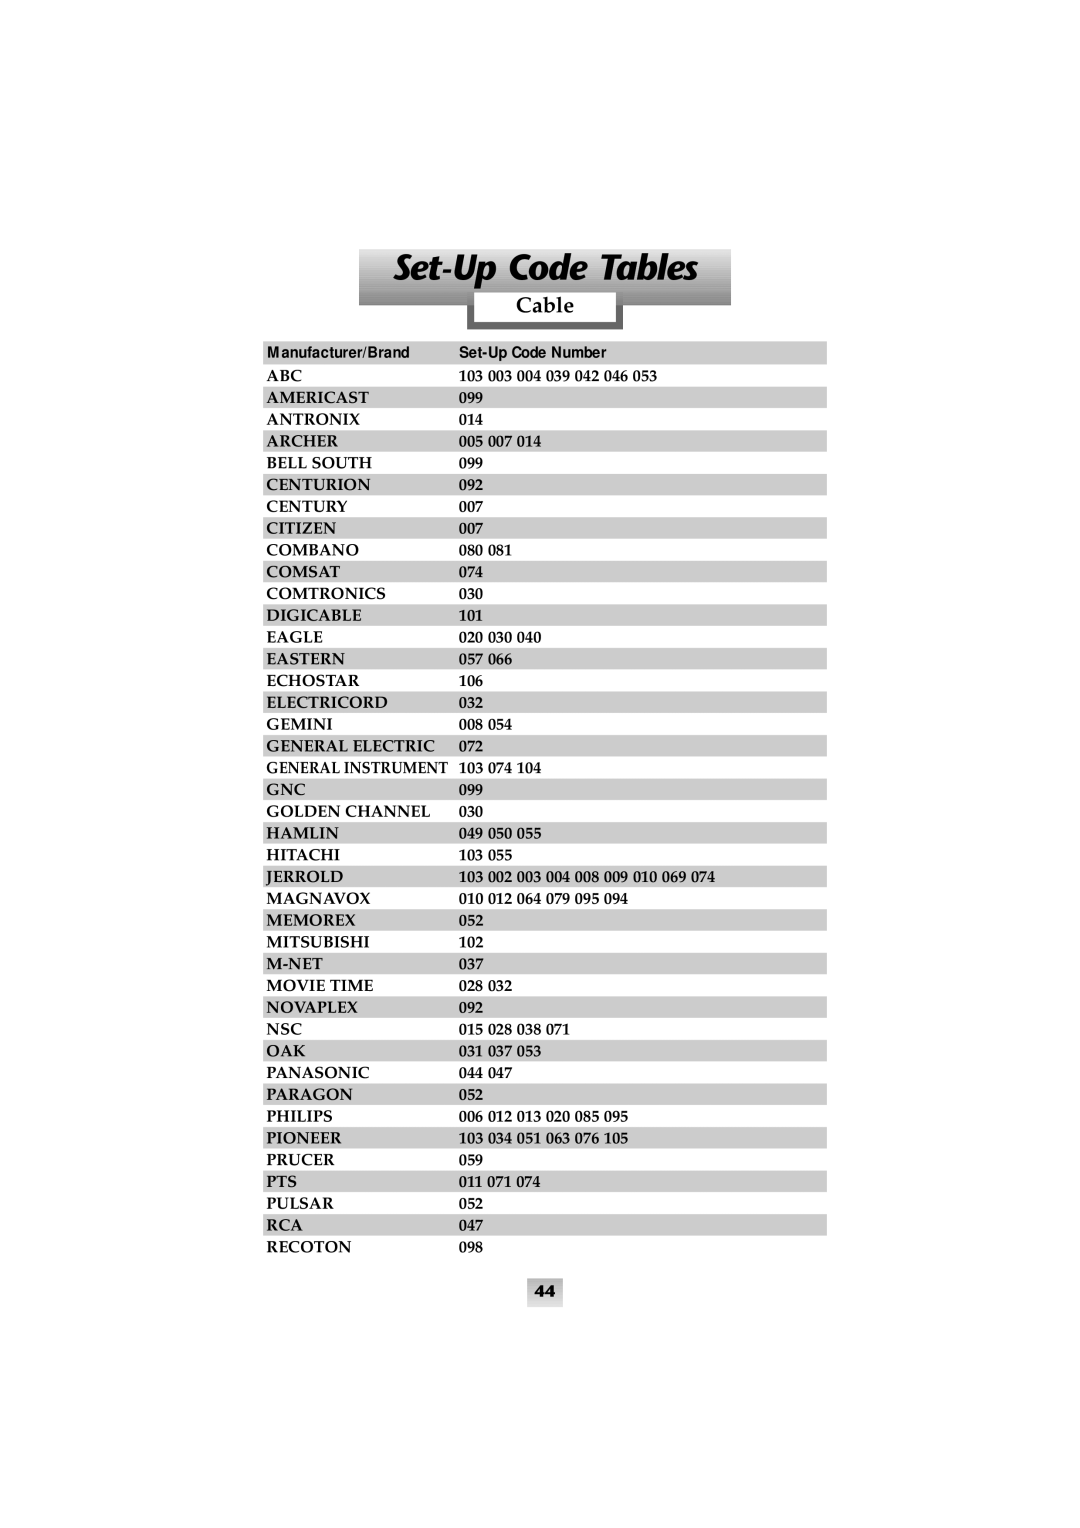 Universal Remote Control SL-8000 Set-Up Code Tables, Cable, Manufacturer/Brand, Set-Up Code Number, General Instrument 